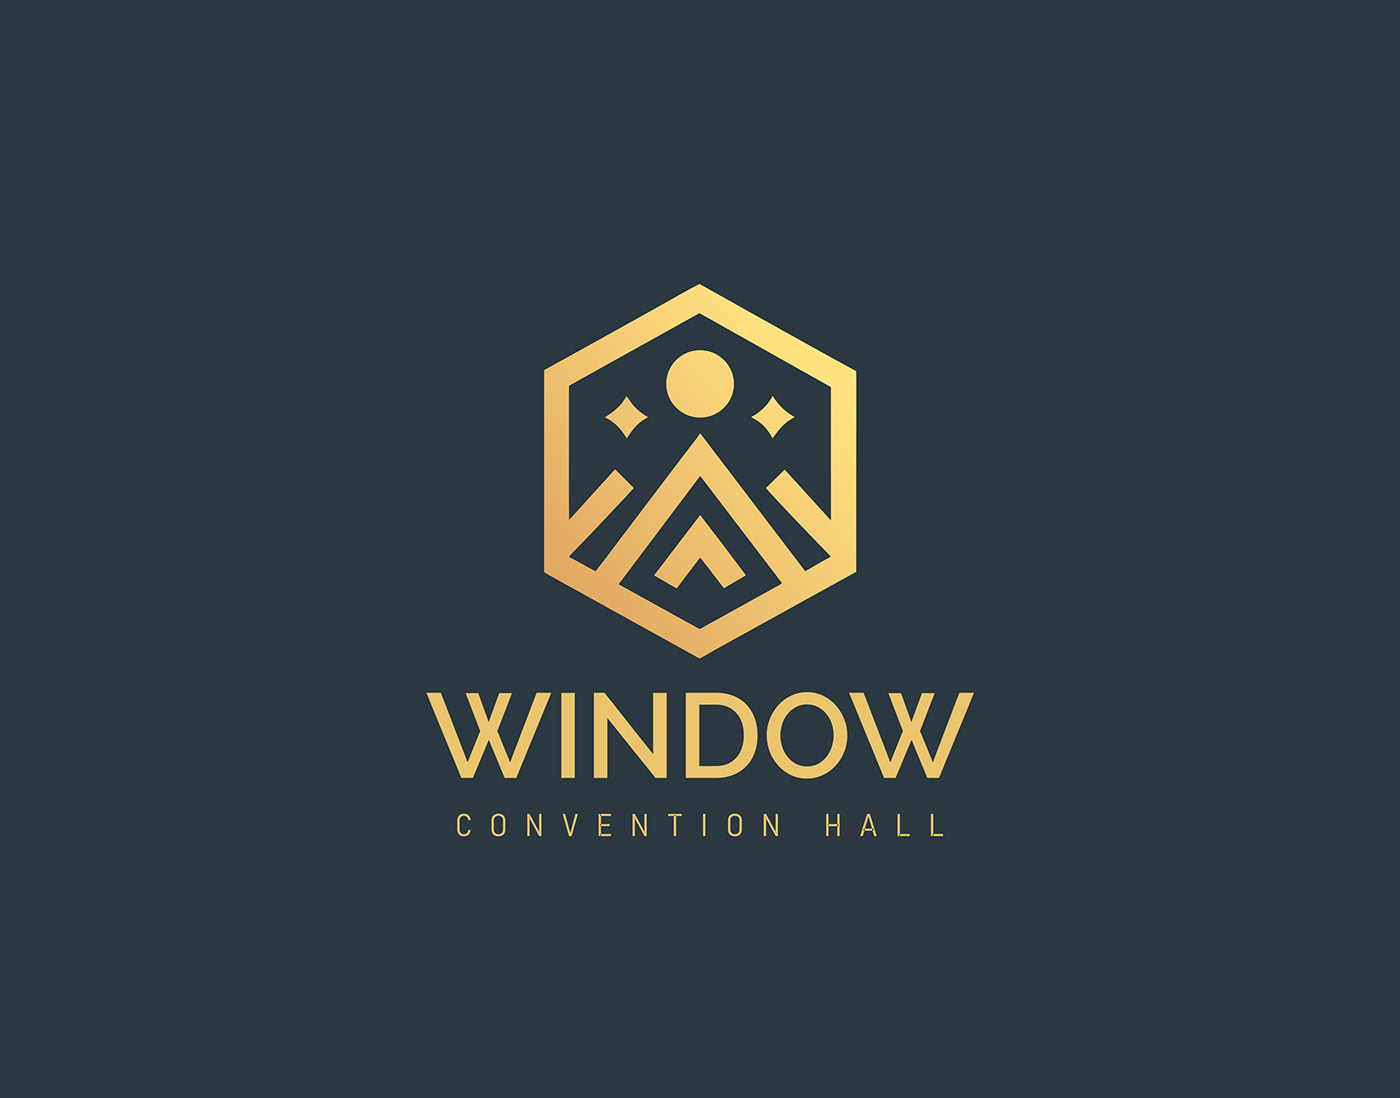 window | Convention Hall - ويندوا | قاعة مؤتمرات
كونتينيو